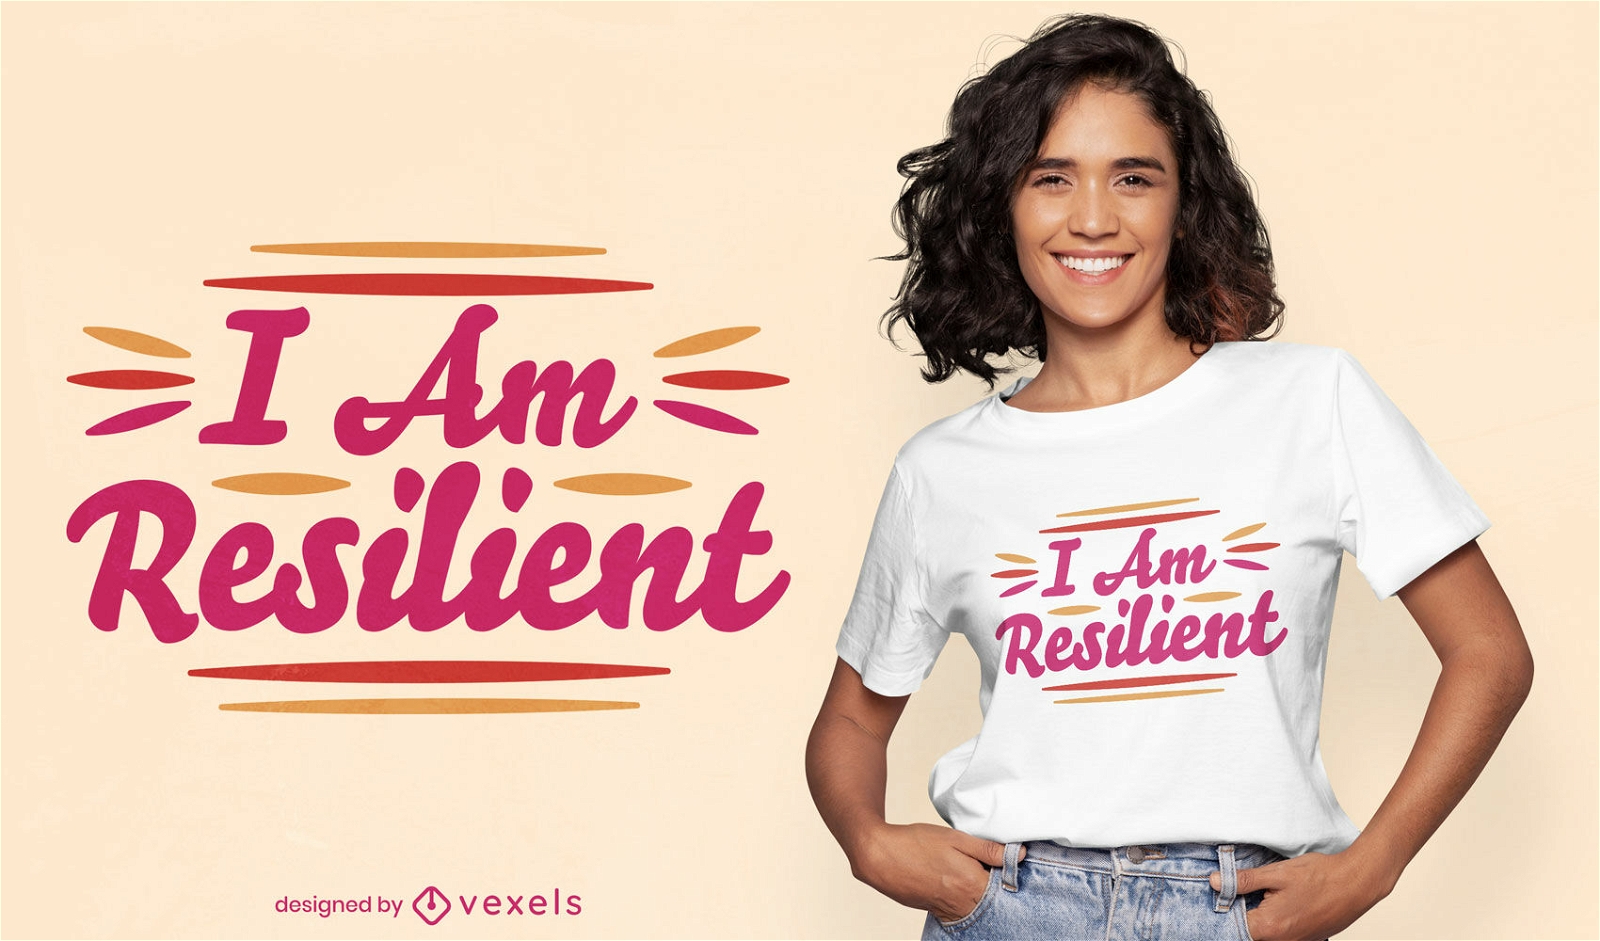 I am resilient t-shirt design